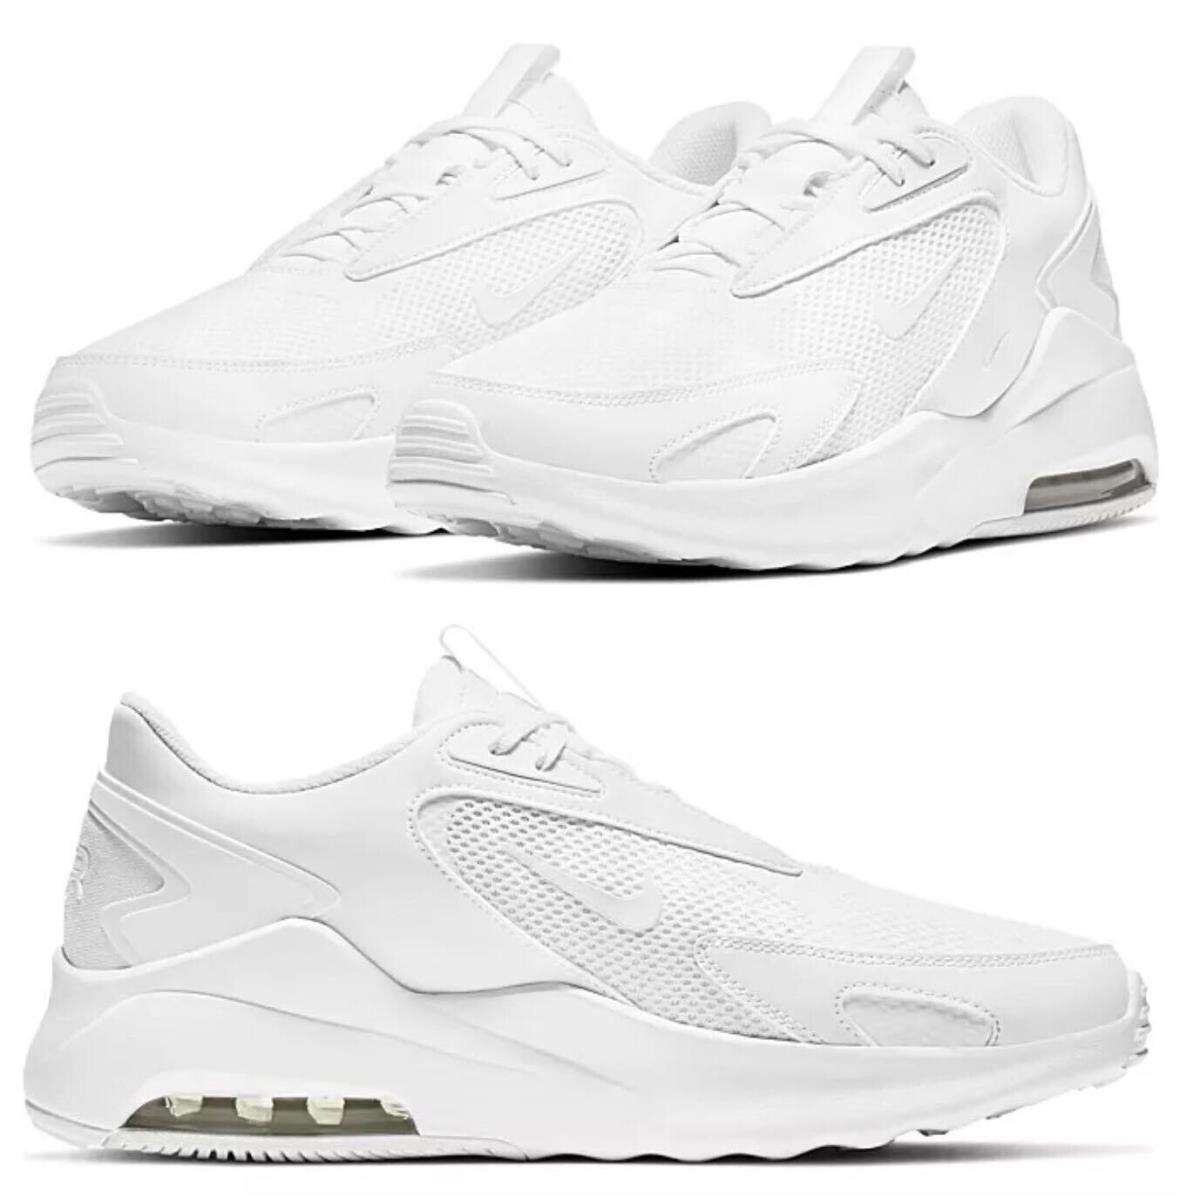 Nike Air Max Bolt Athletic Sneakers Shoes Mens Triple White Siz 8.5